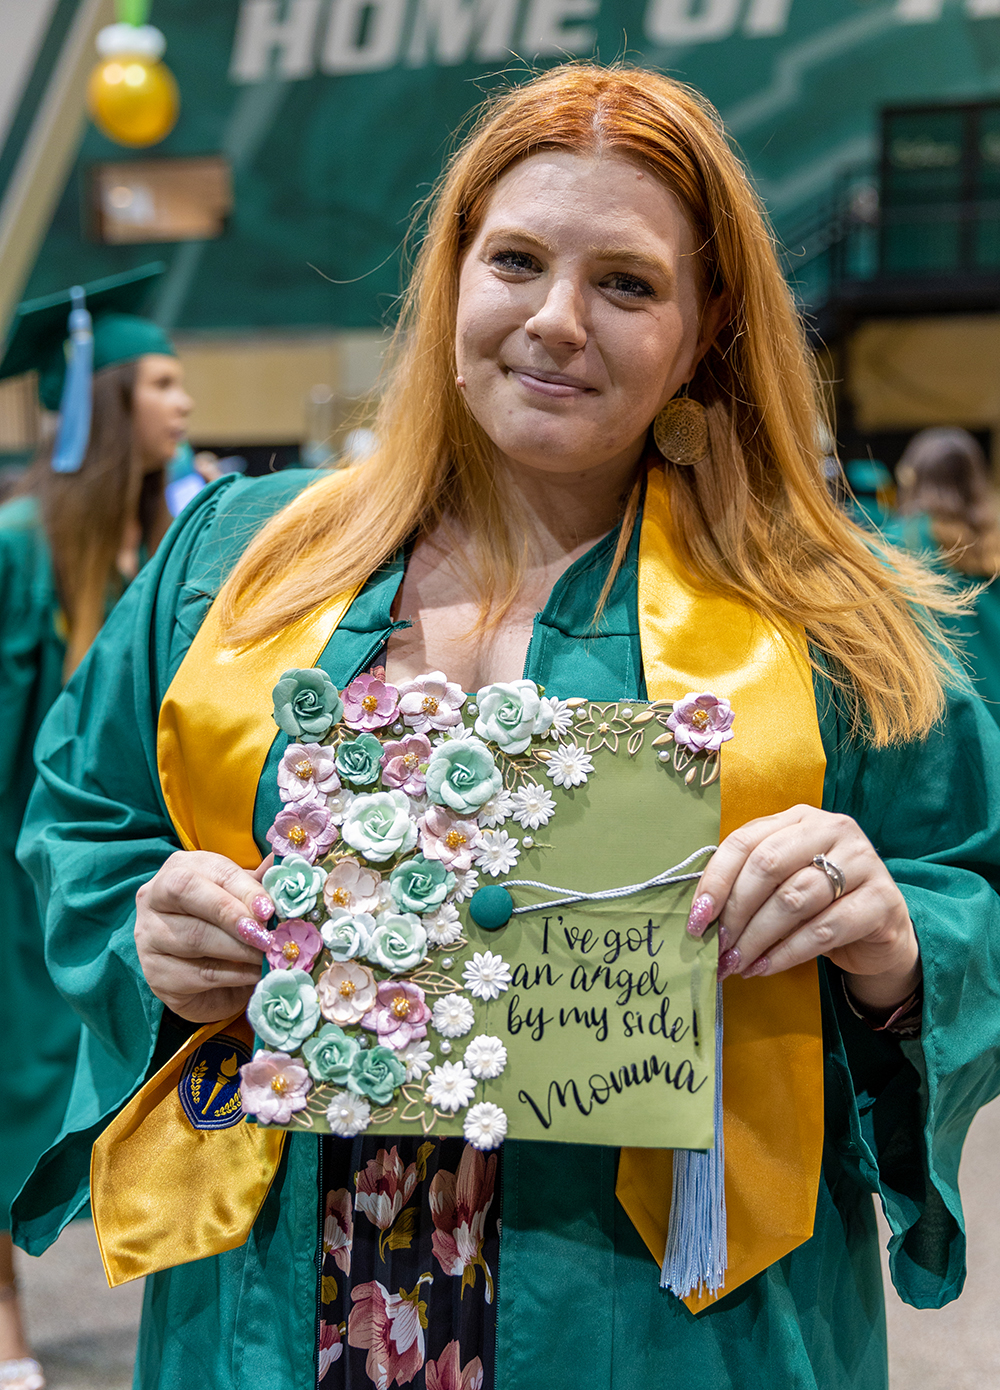 Graduation Cap - A thank you message to mom